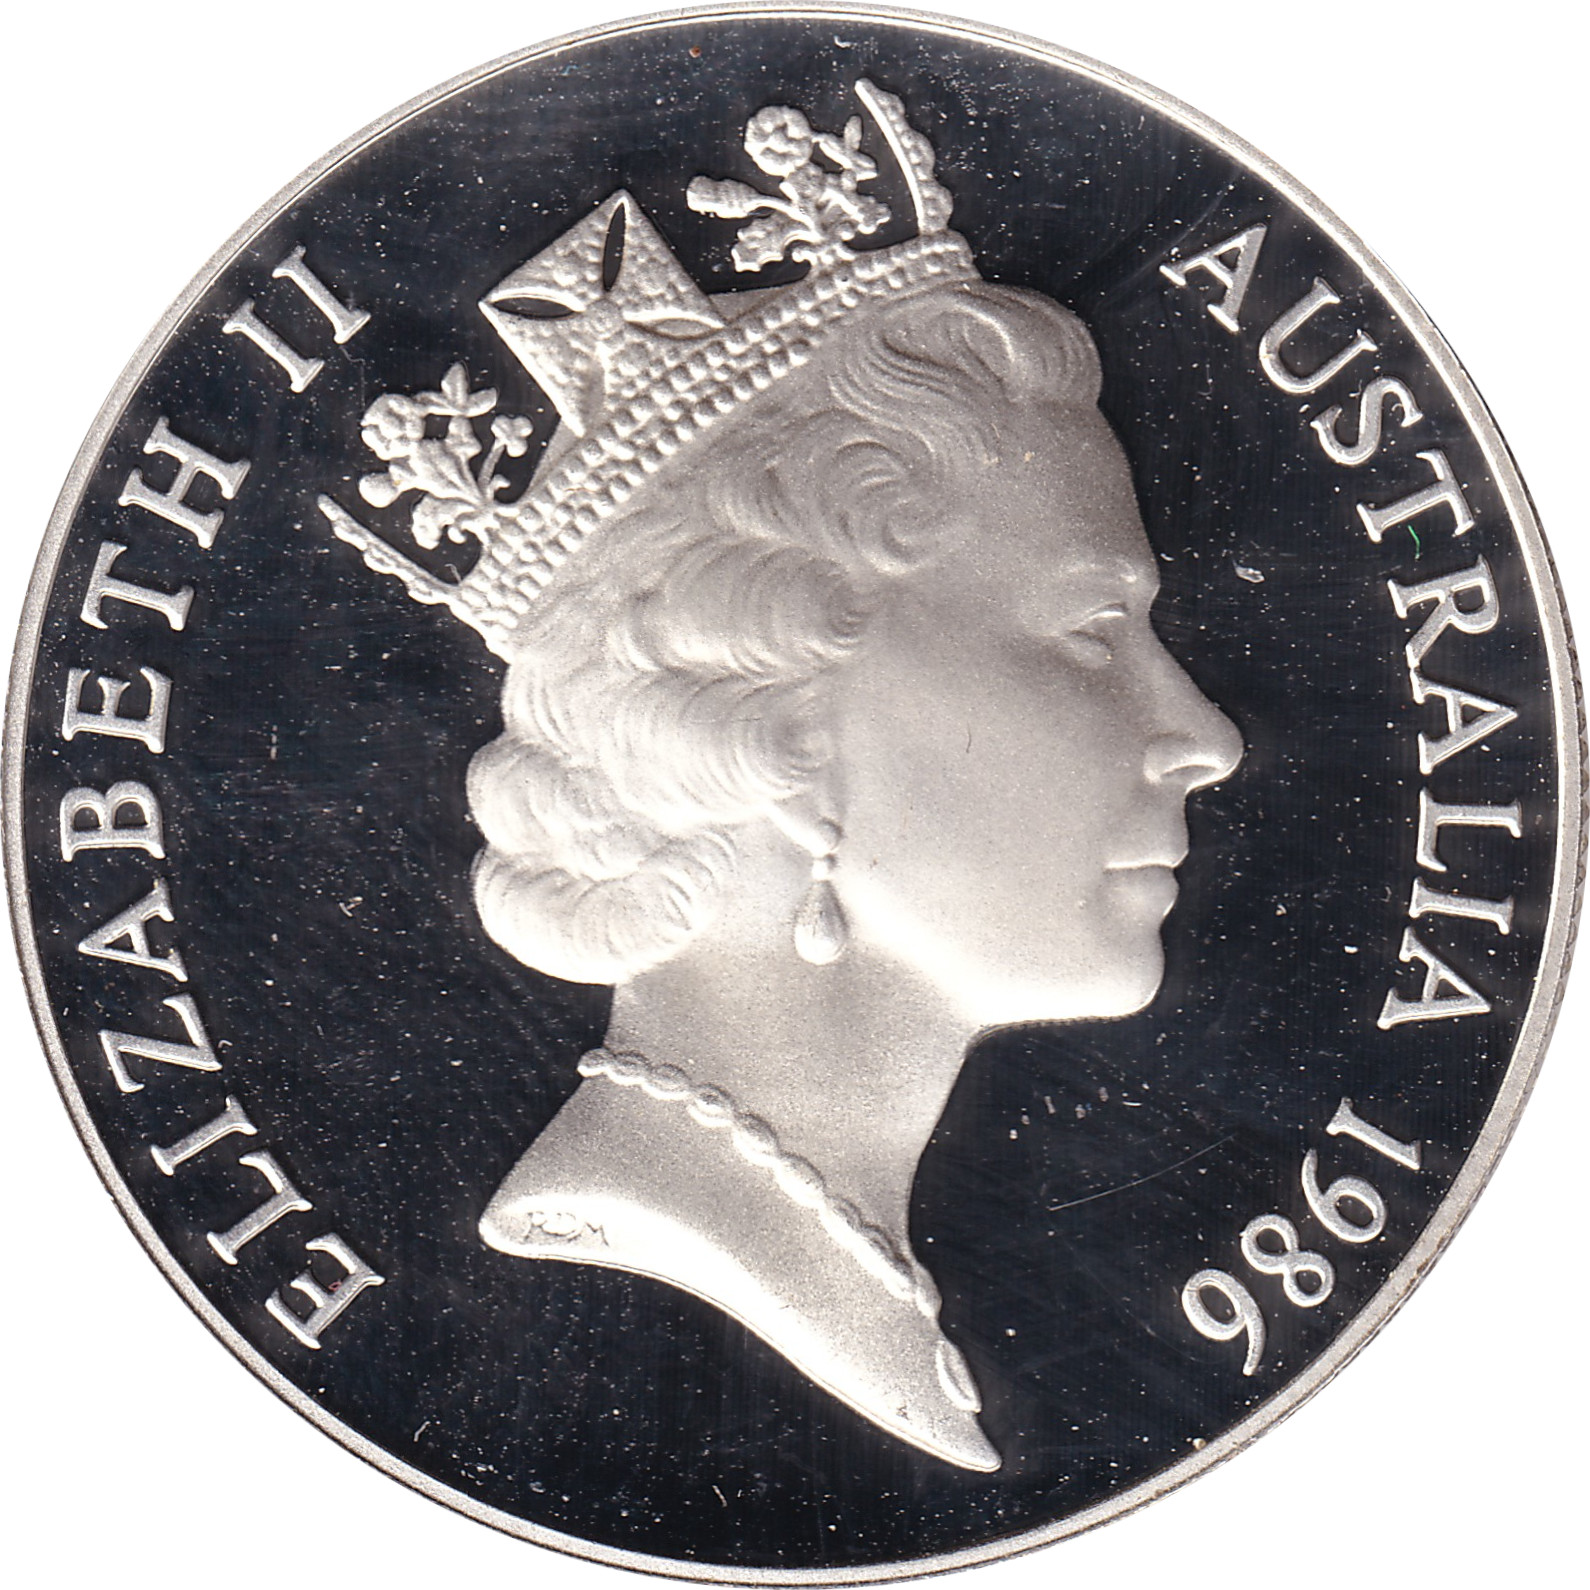 10 dollars - South Australia